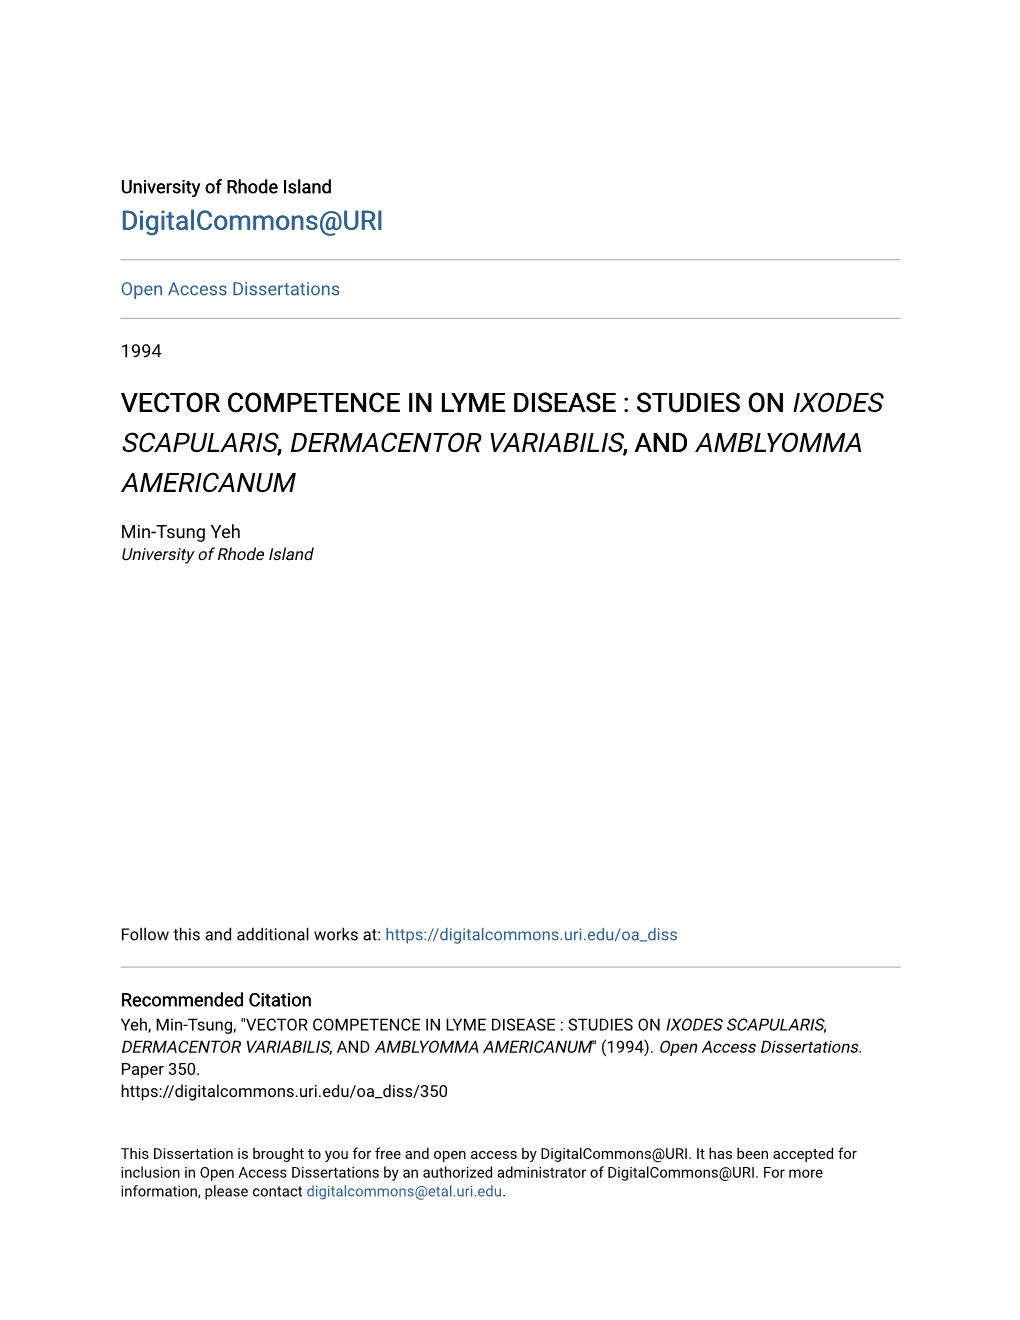 Vector Competence in Lyme Disease : Studies on Ixodes Scapularis, Dermacentor Variabilis, and Amblyomma Americanum